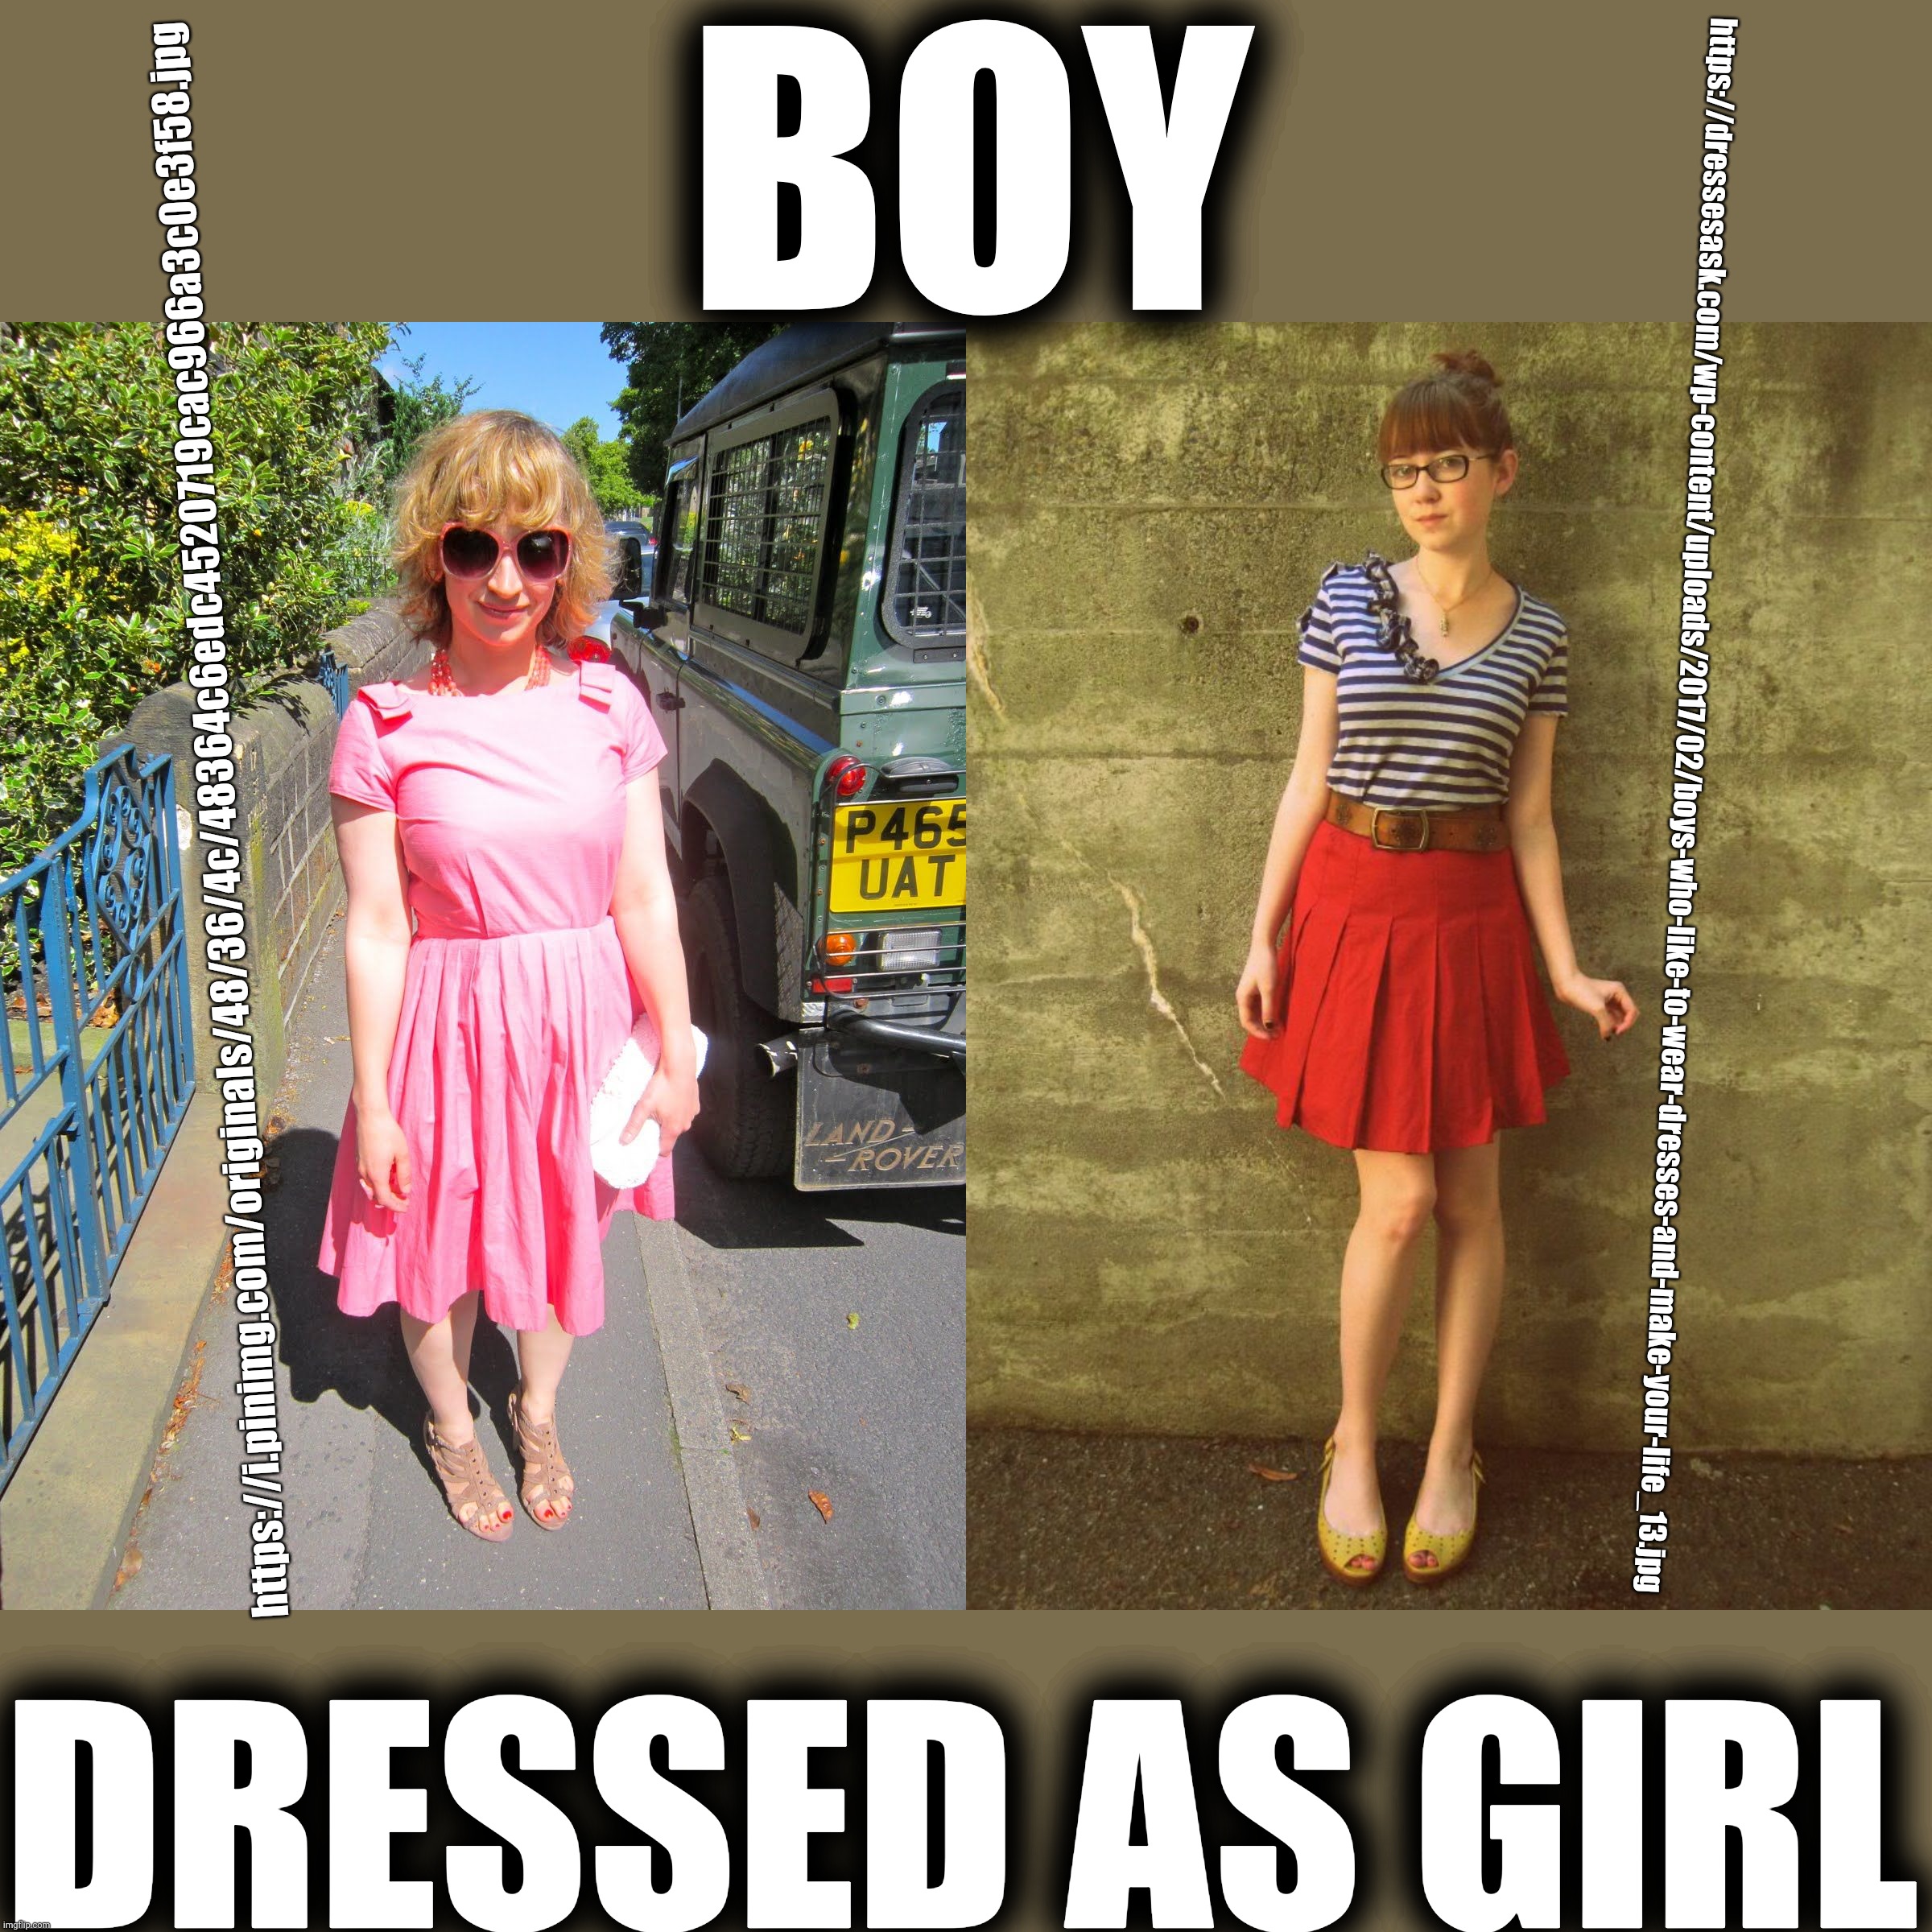 Boy dress | BOY; https://dressesask.com/wp-content/uploads/2017/02/boys-who-like-to-wear-dresses-and-make-your-life_13.jpg; https://i.pinimg.com/originals/48/36/4c/48364c6edc4520719cac966a3c0e3f58.jpg; DRESSED AS GIRL | image tagged in boy,girl,dress,website | made w/ Imgflip meme maker